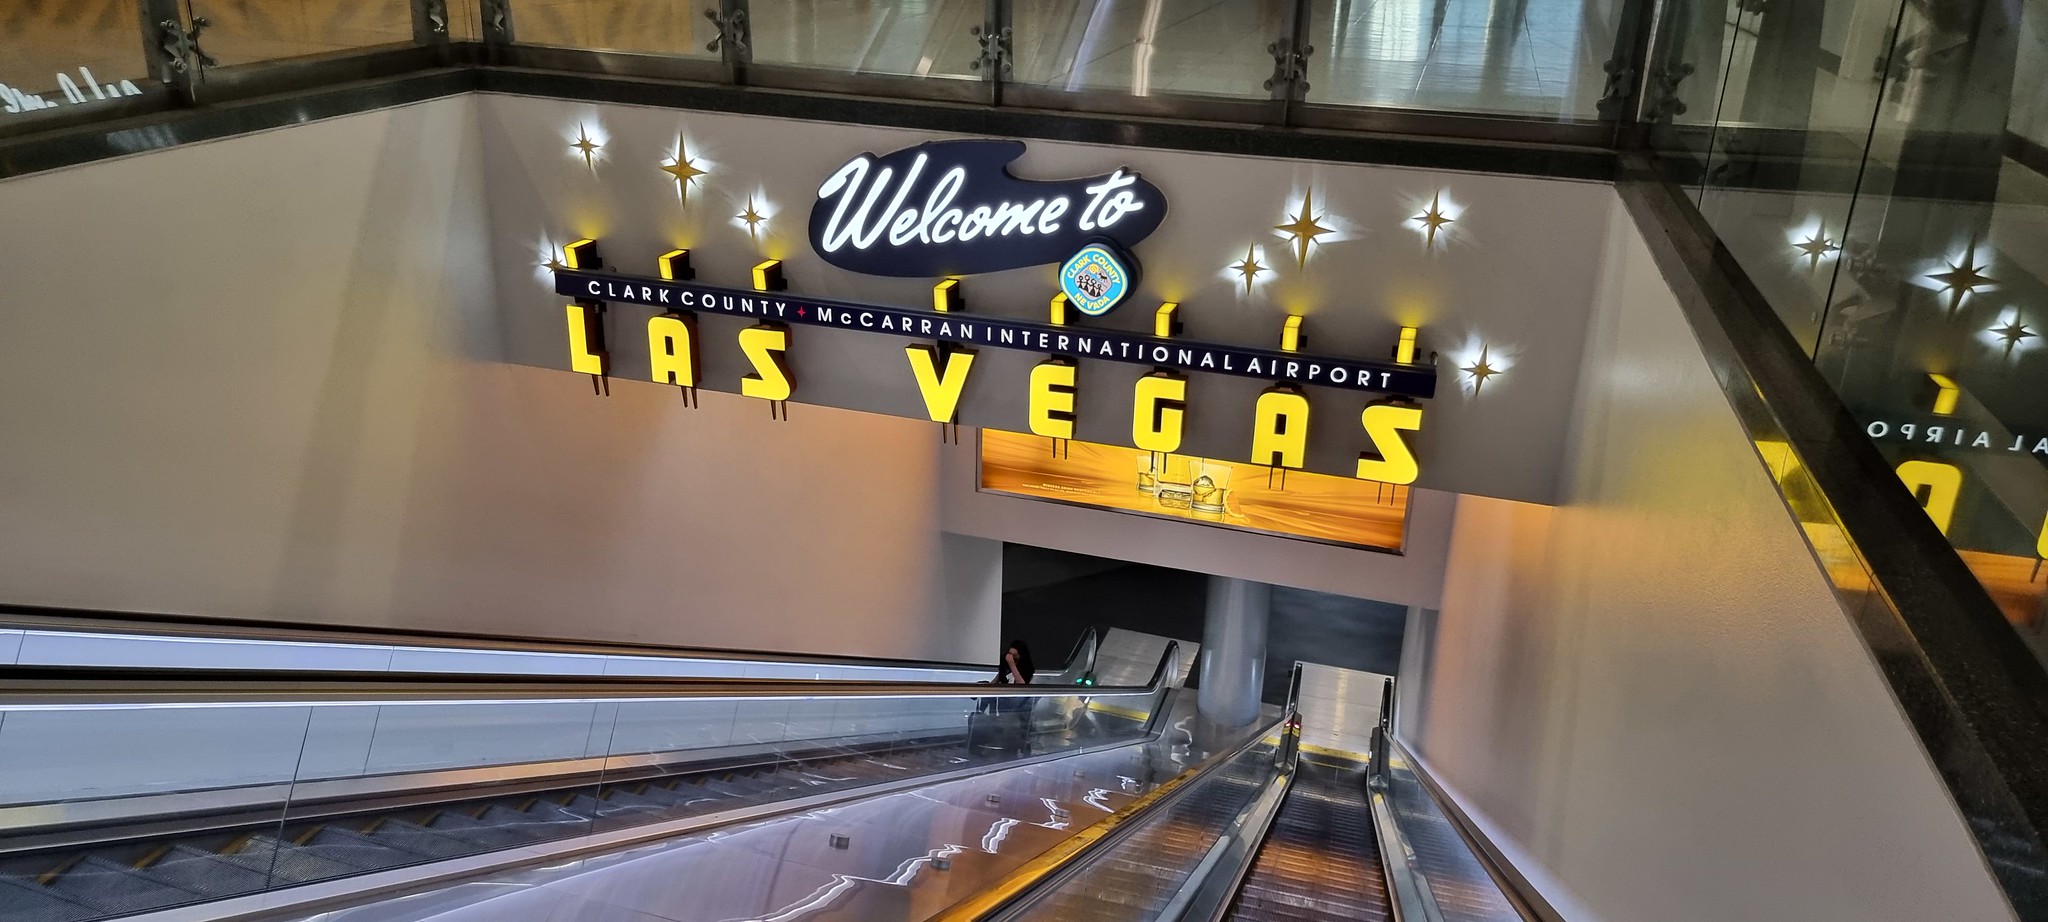 Arriving into Las Vegas